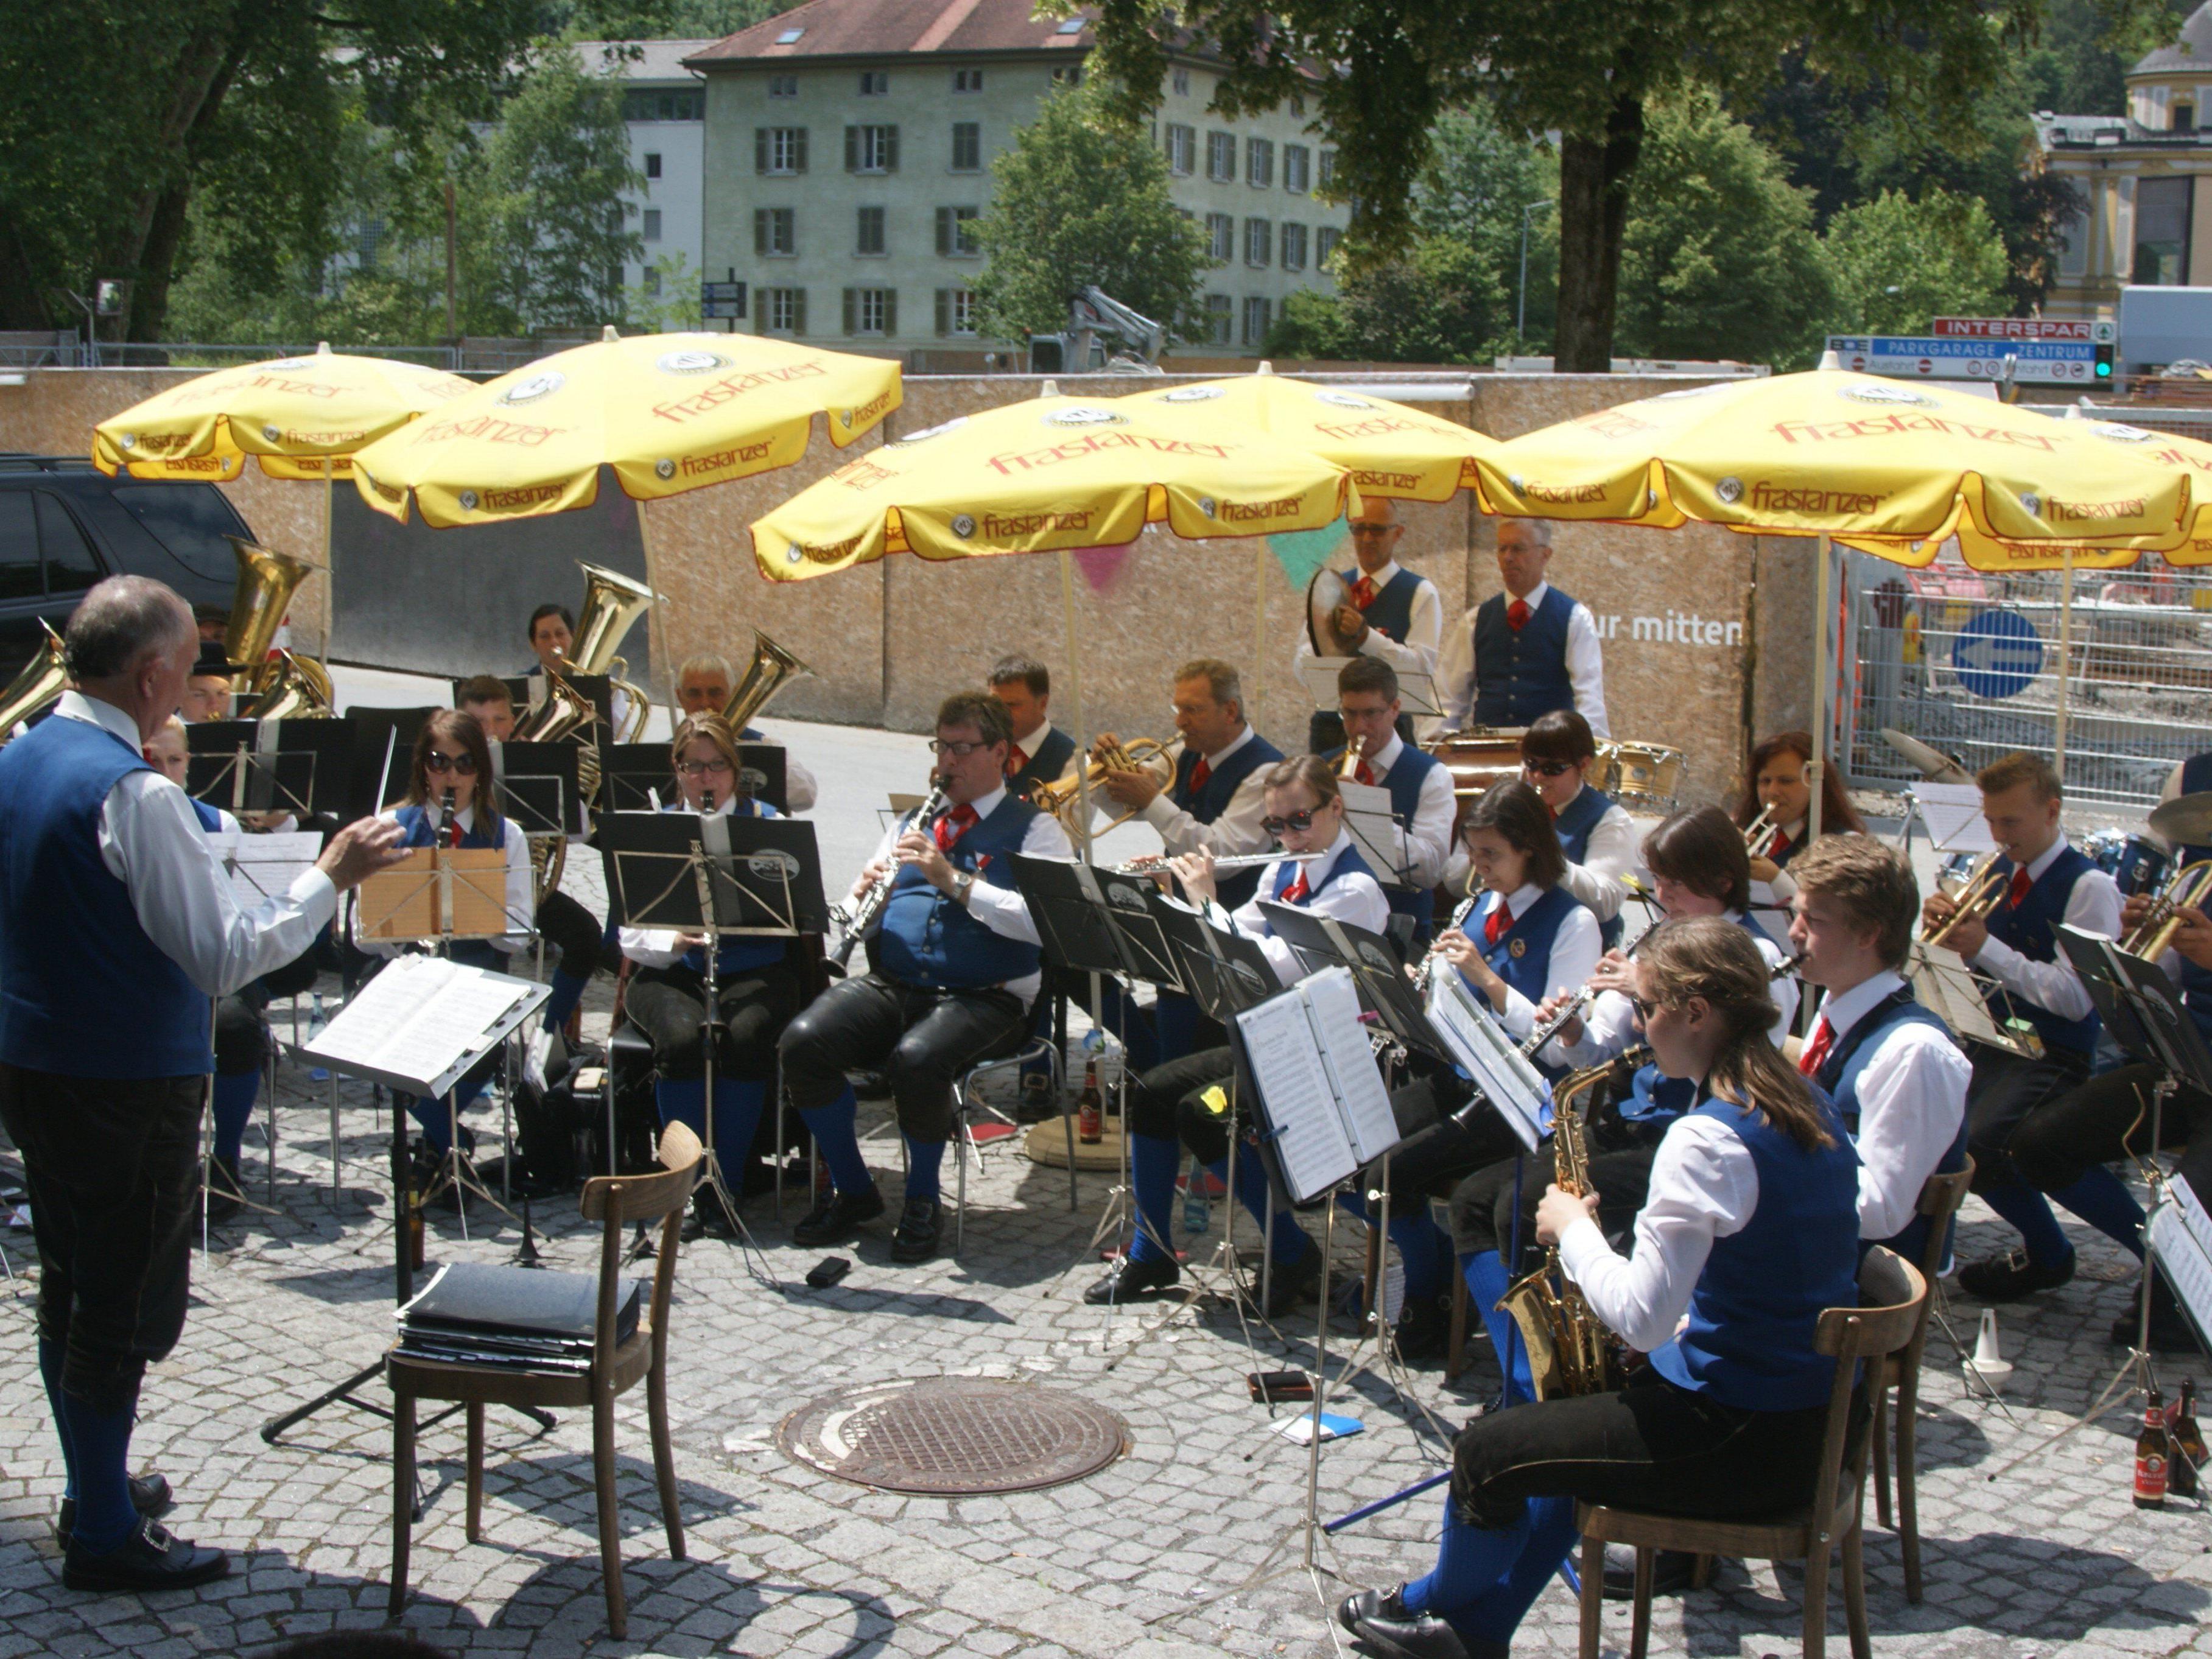 Stadtmusik Feldkirch